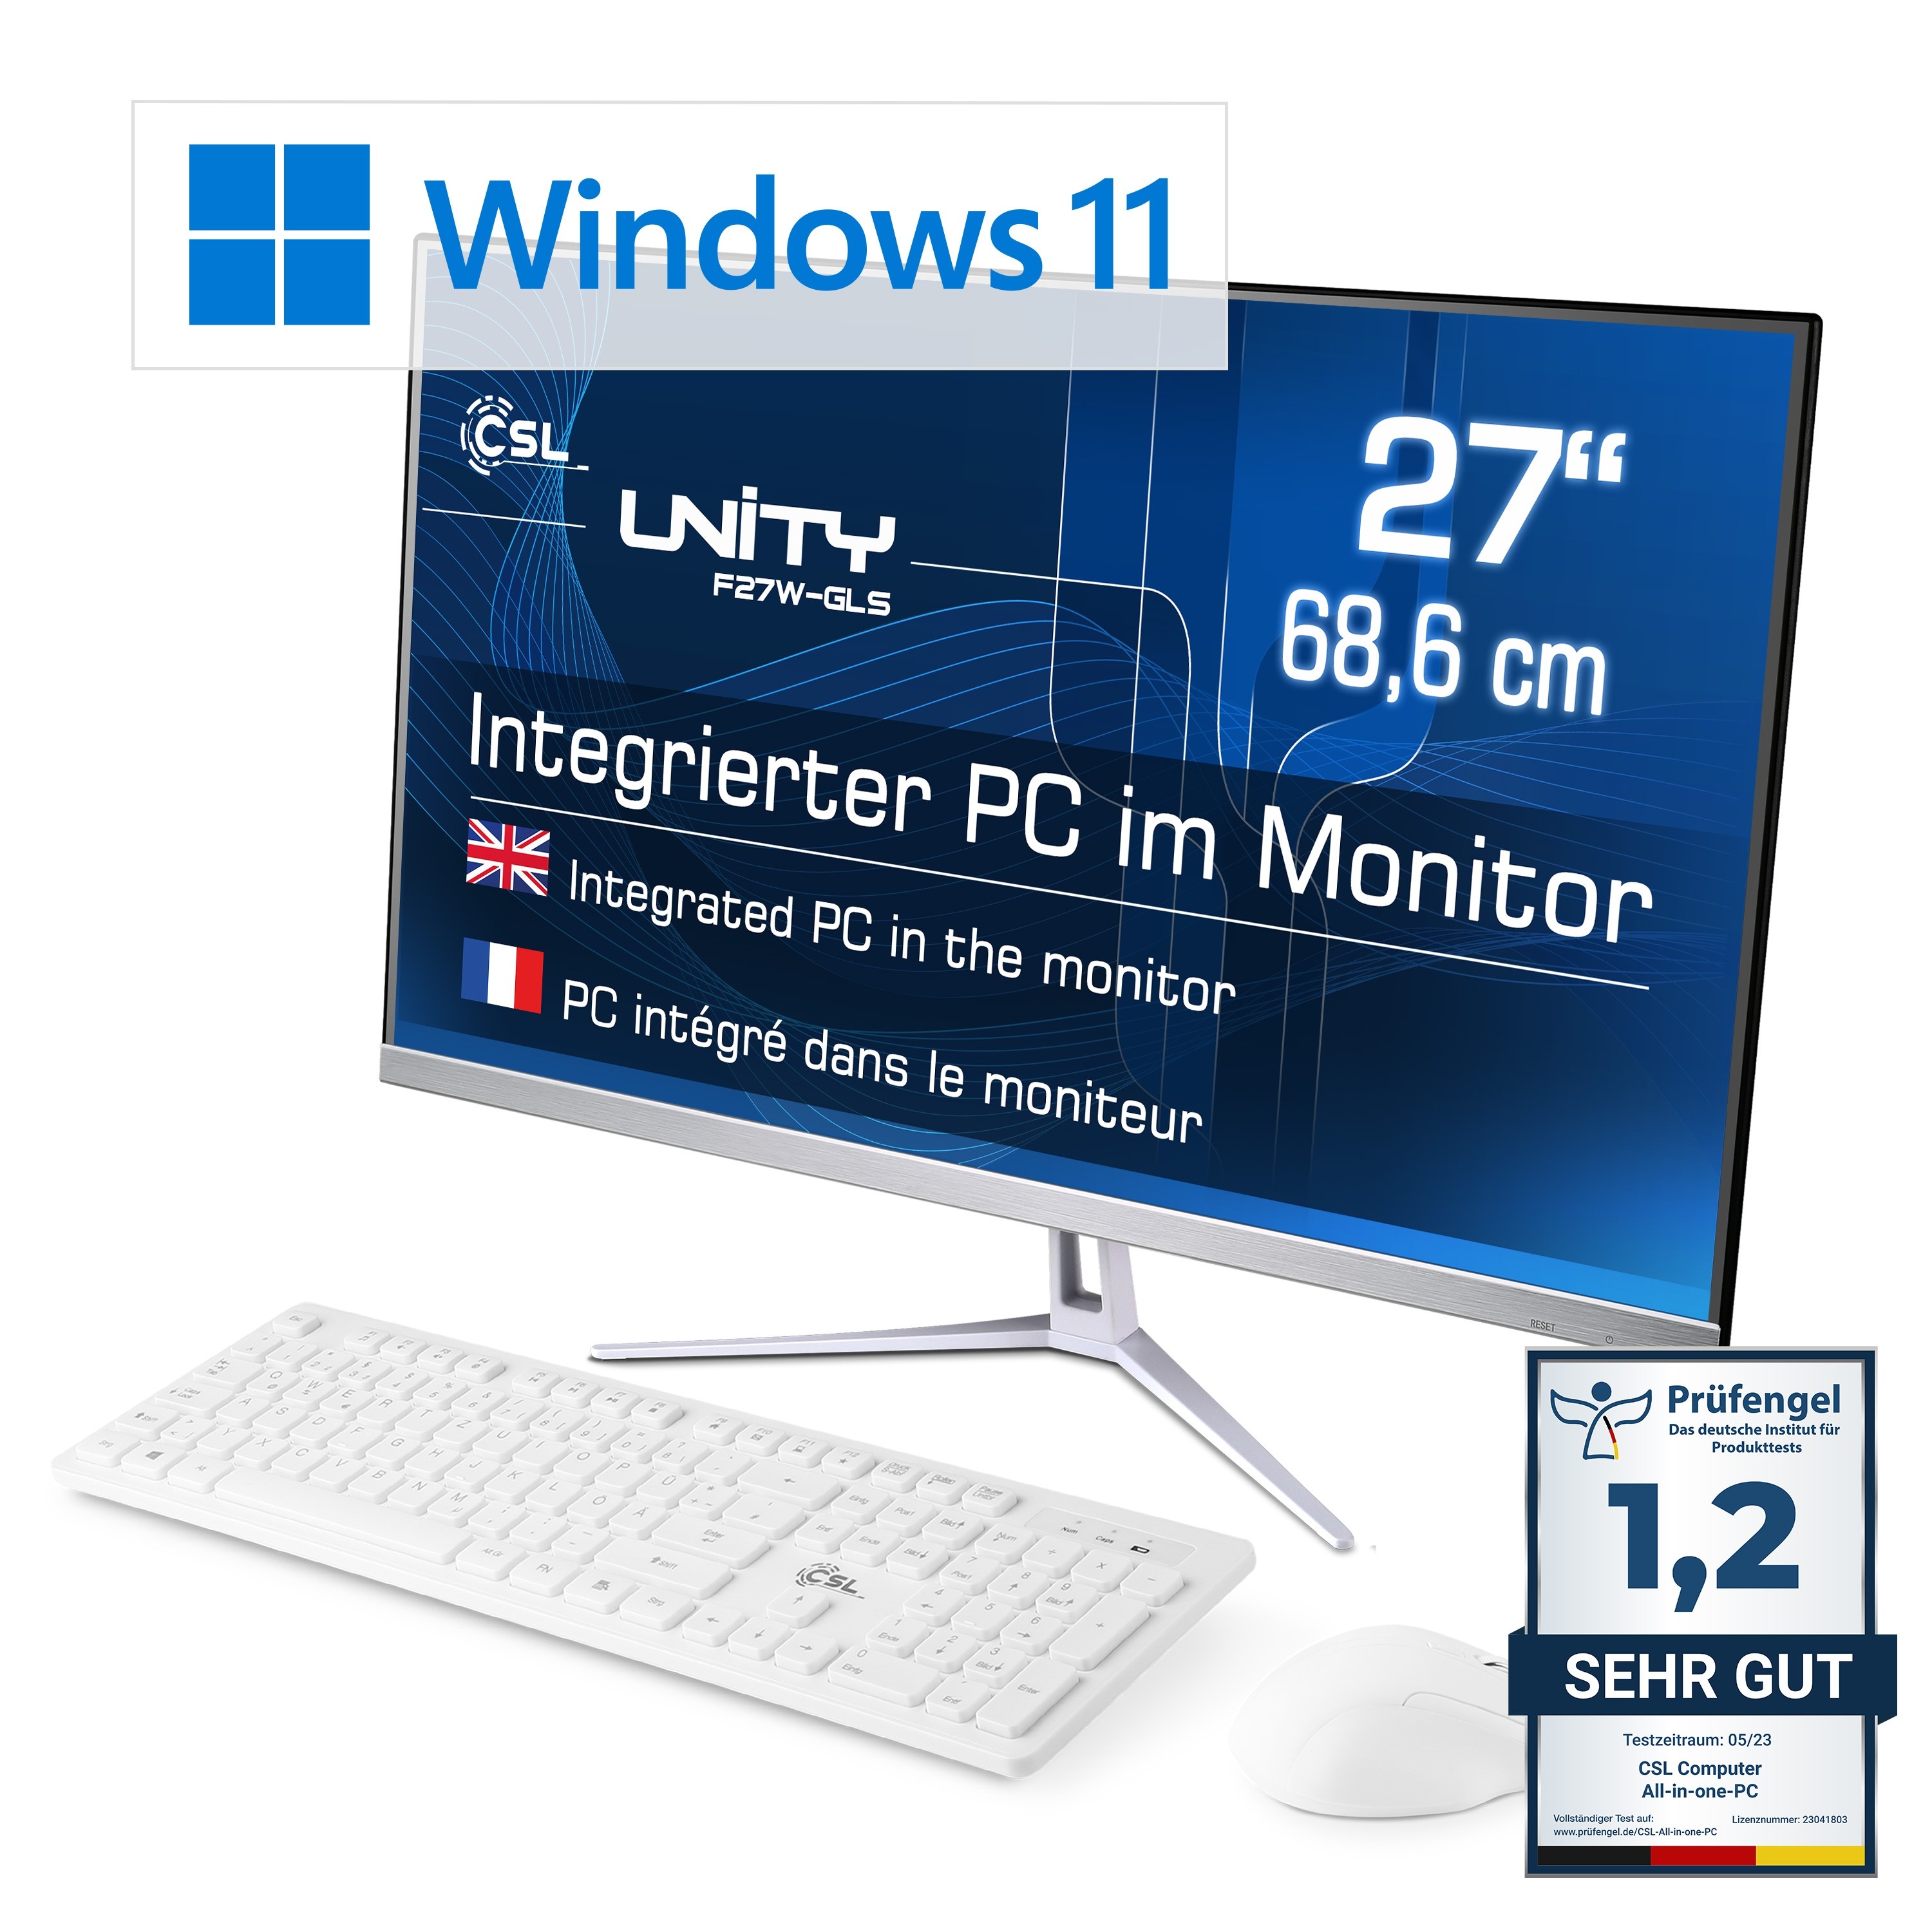 CSL Computer | All-in-One-PC RAM Unity / Home 256 CSL 11 GB / 16 / F27W-JLS GB Windows